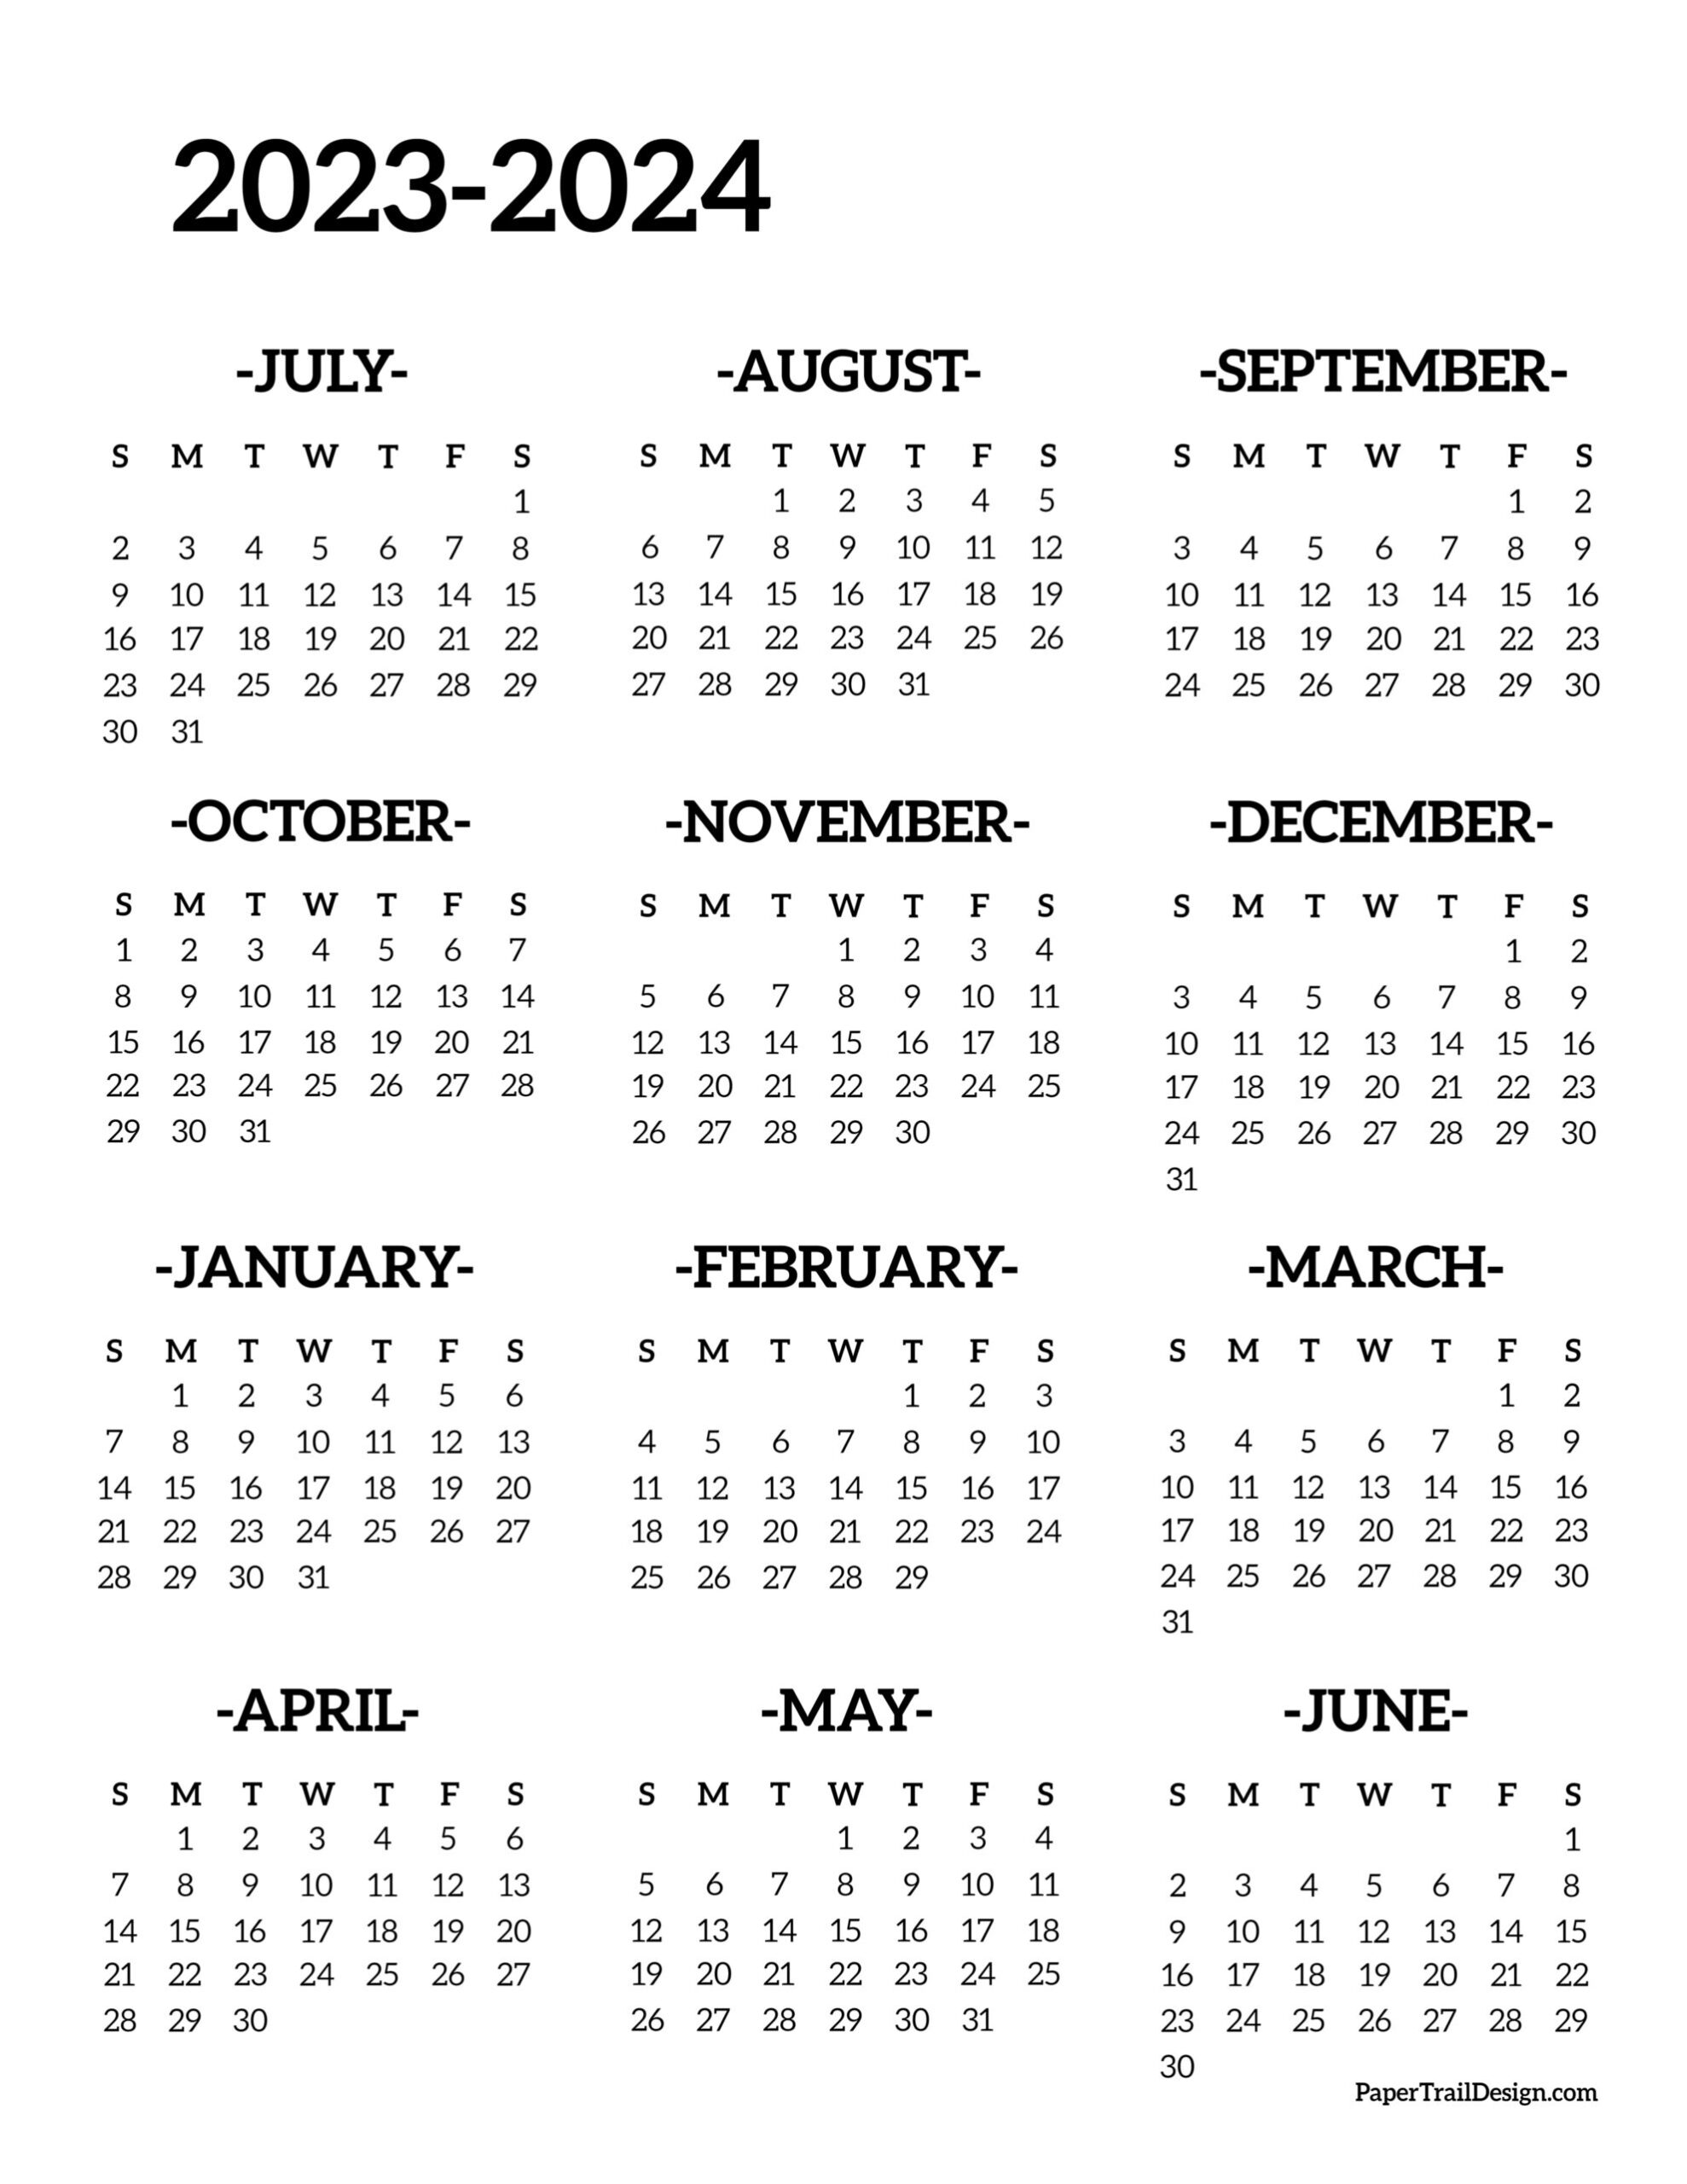 2023-2024 School Year Calendar Free Printable - Paper Trail Design | 2023 And 2024 Calendar Printable